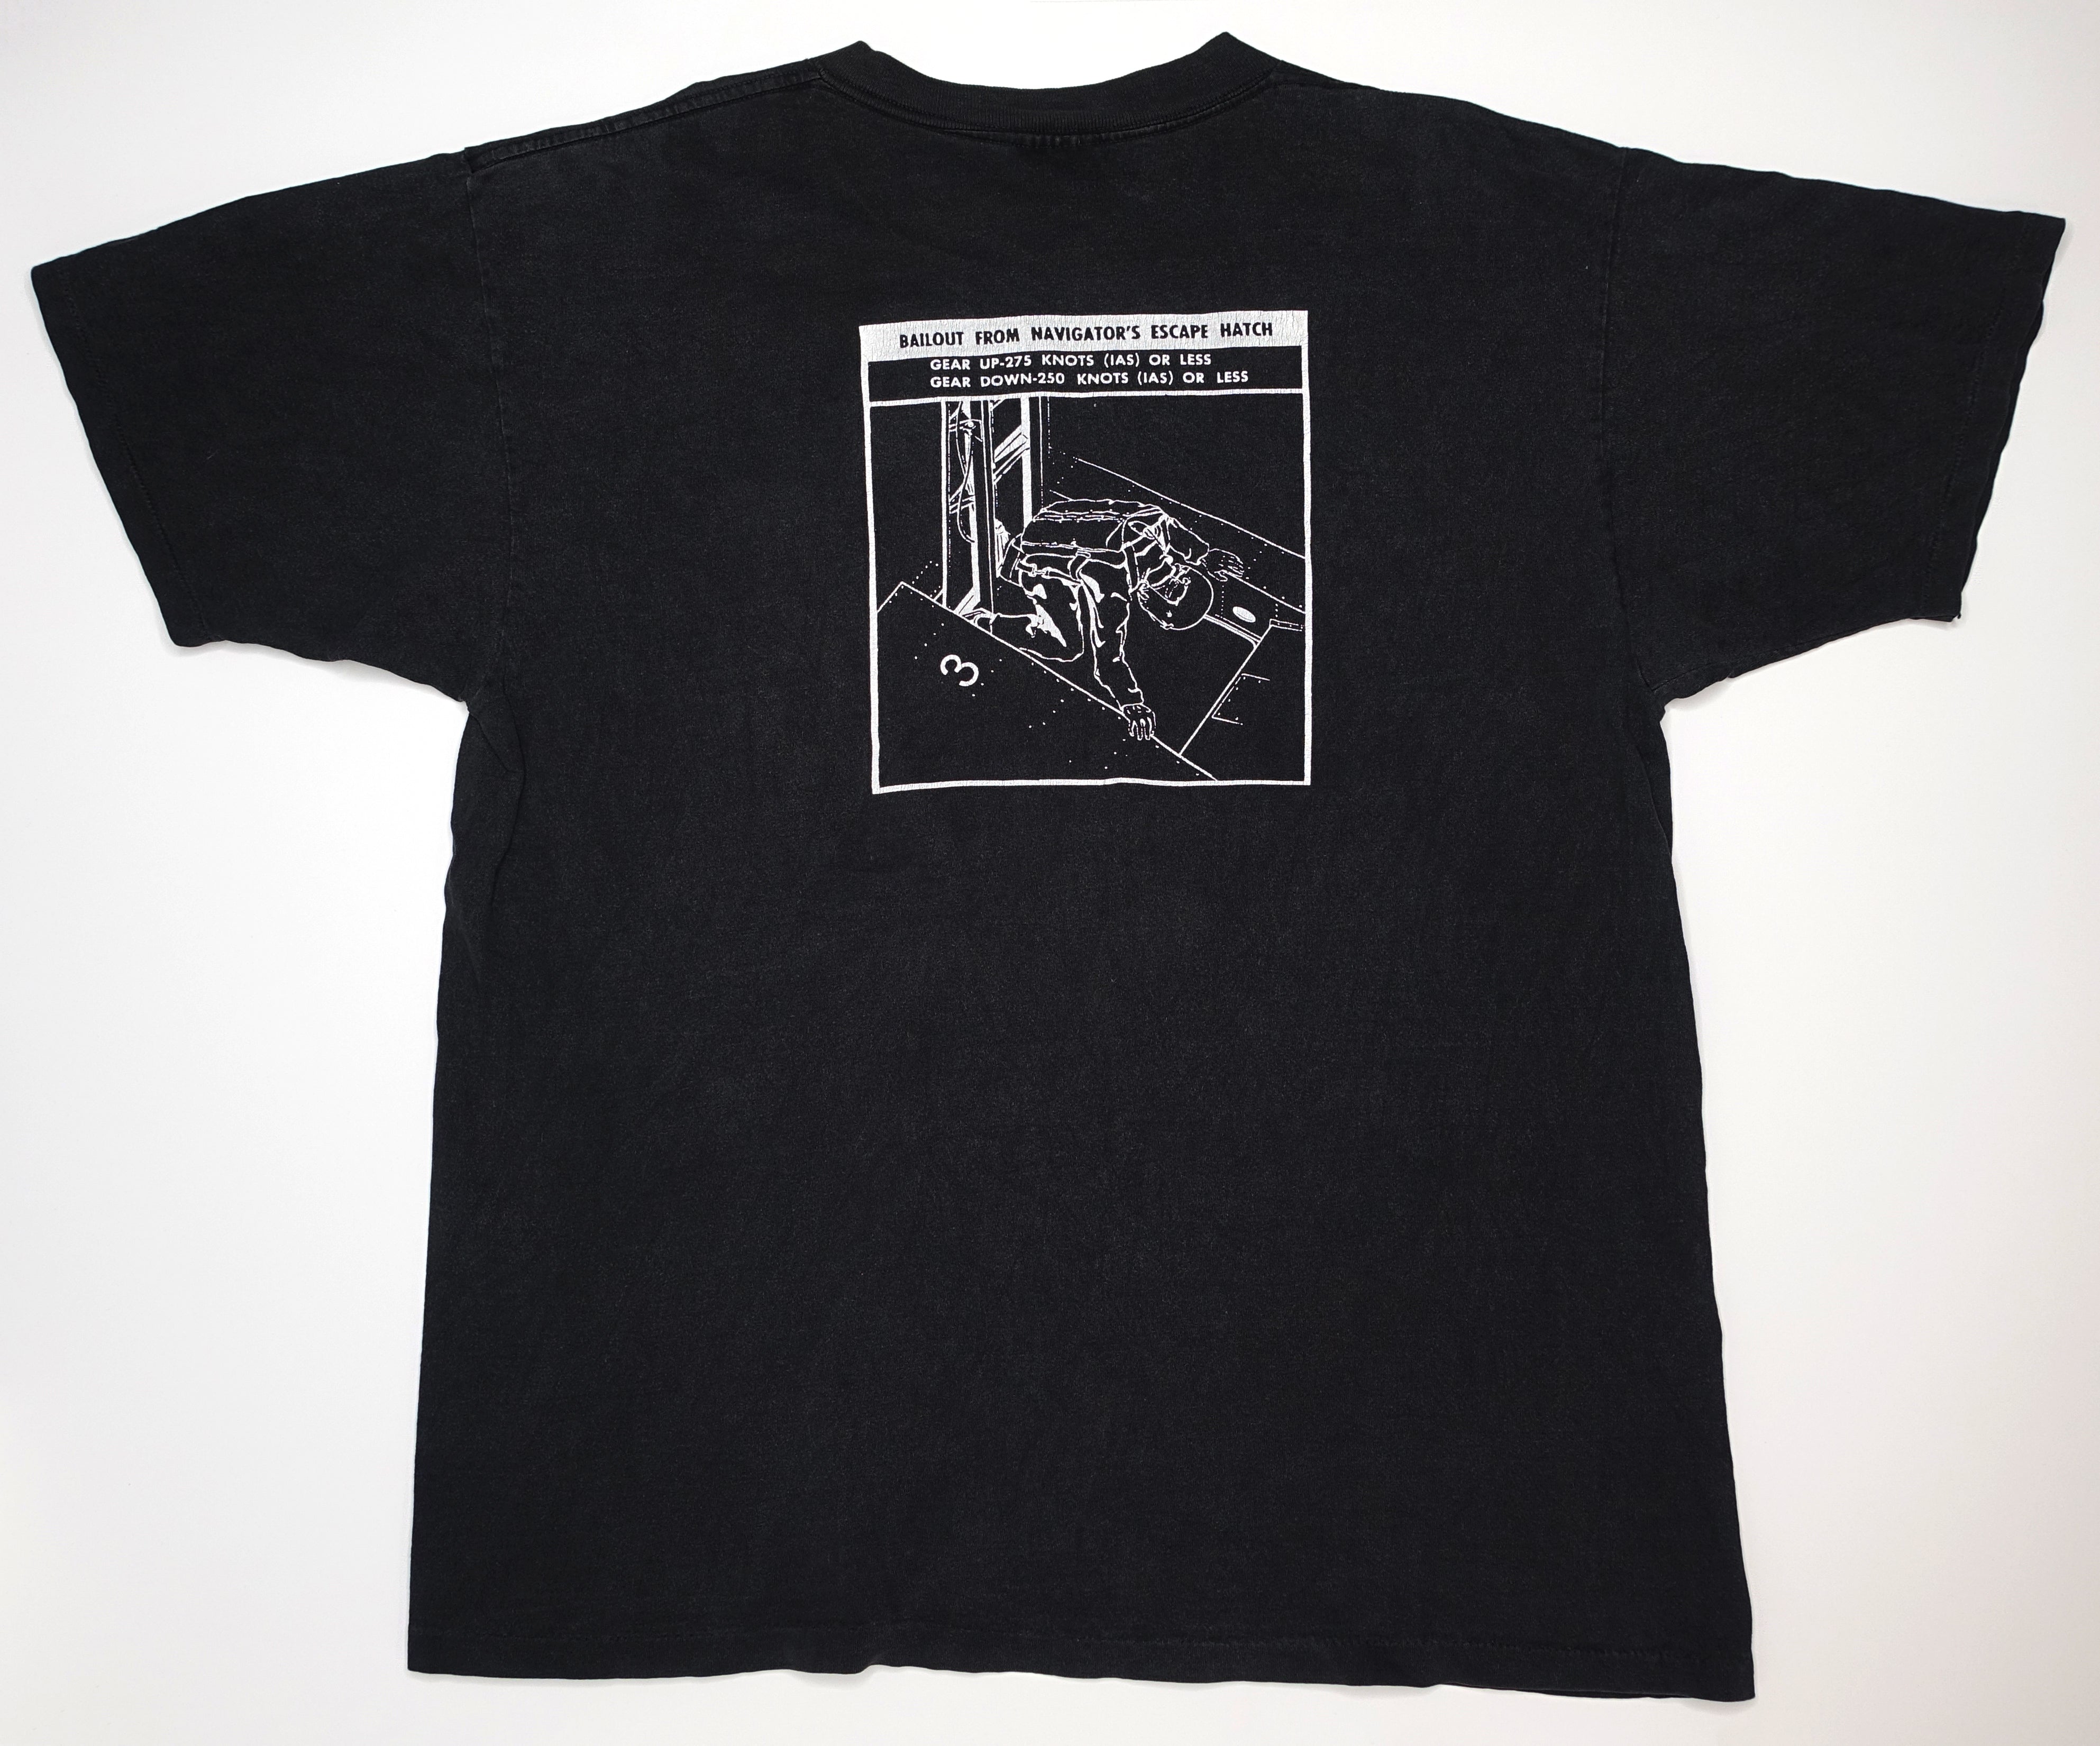 Three Mile Pilot - Escape Hatch / Chief Assassin To The Sinister 1994 Tour Shirt Size XL